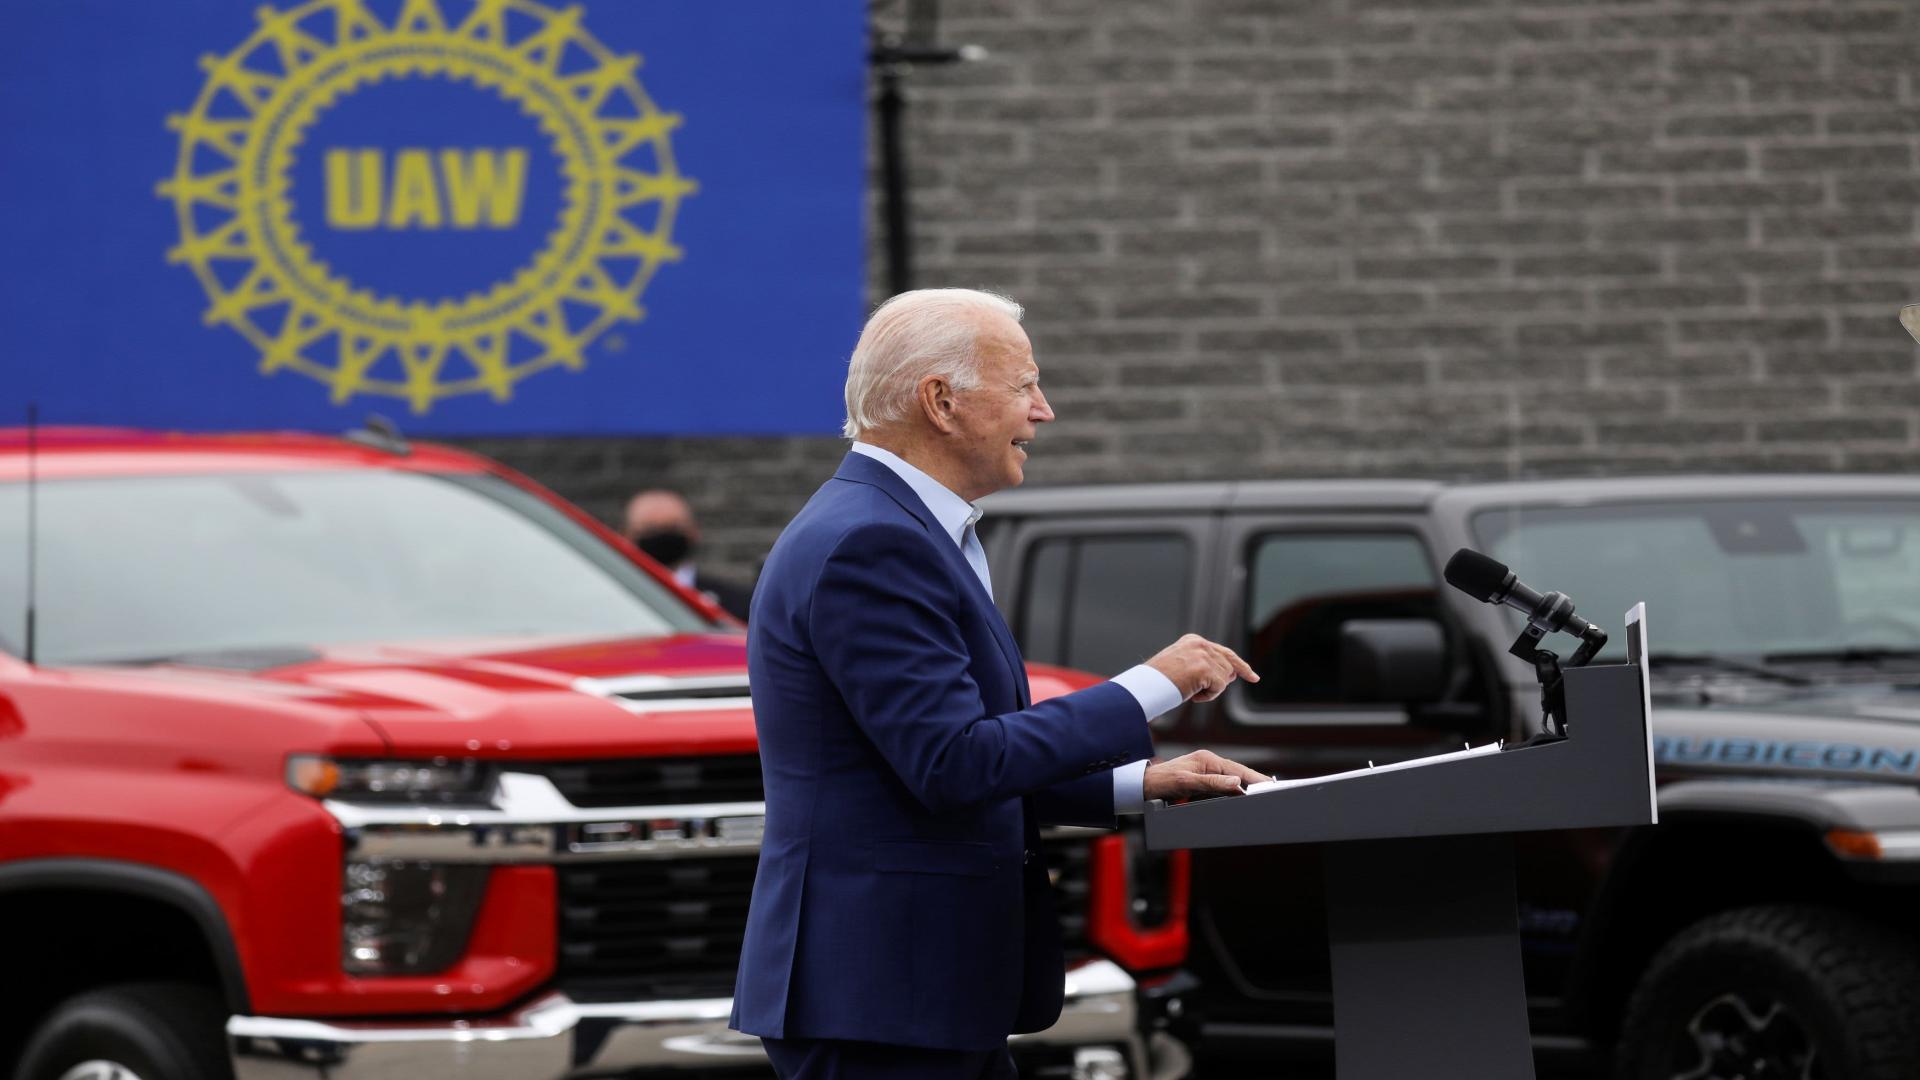 Biden urges 'fair agreement' between UAW and Detroit automakers that avoids plant closures